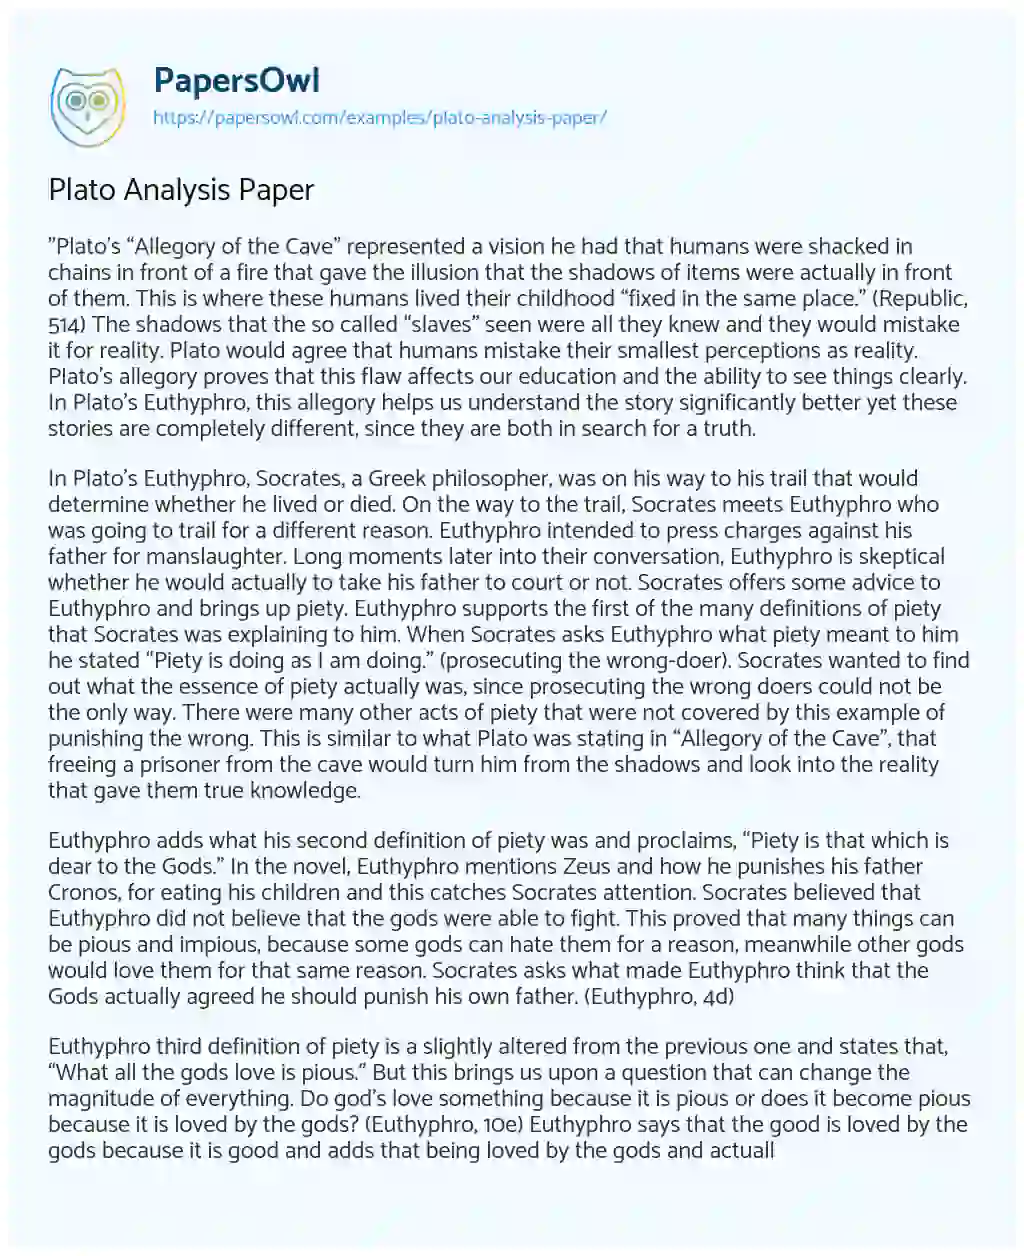 Essay on Plato Analysis Paper